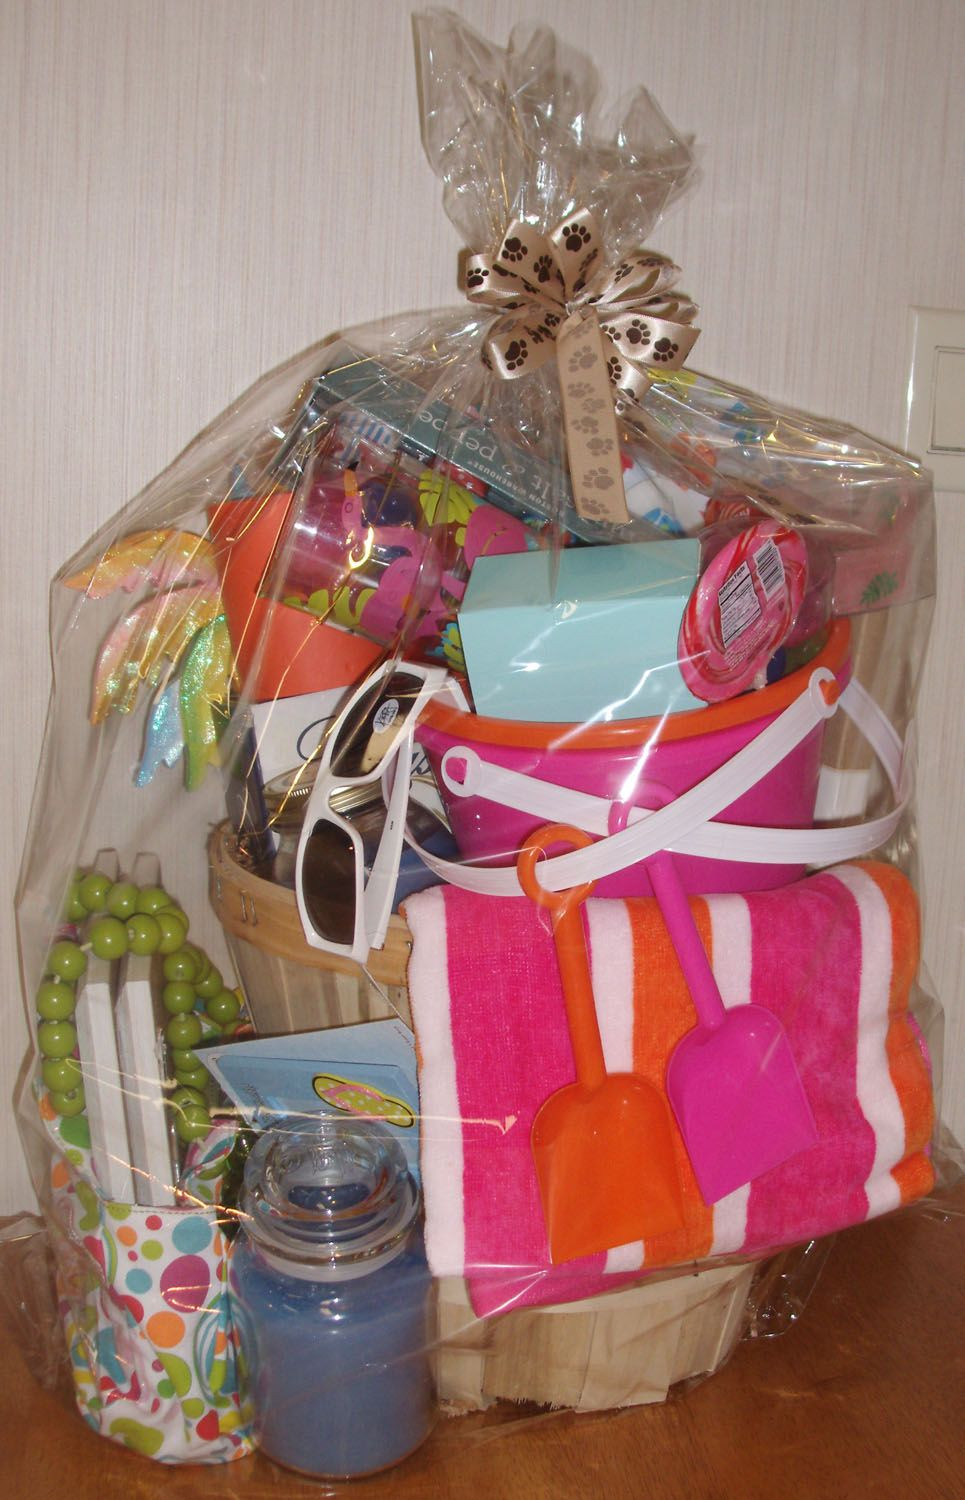 Beach Themed Gift Basket Ideas
 Basket Themes for Raffles